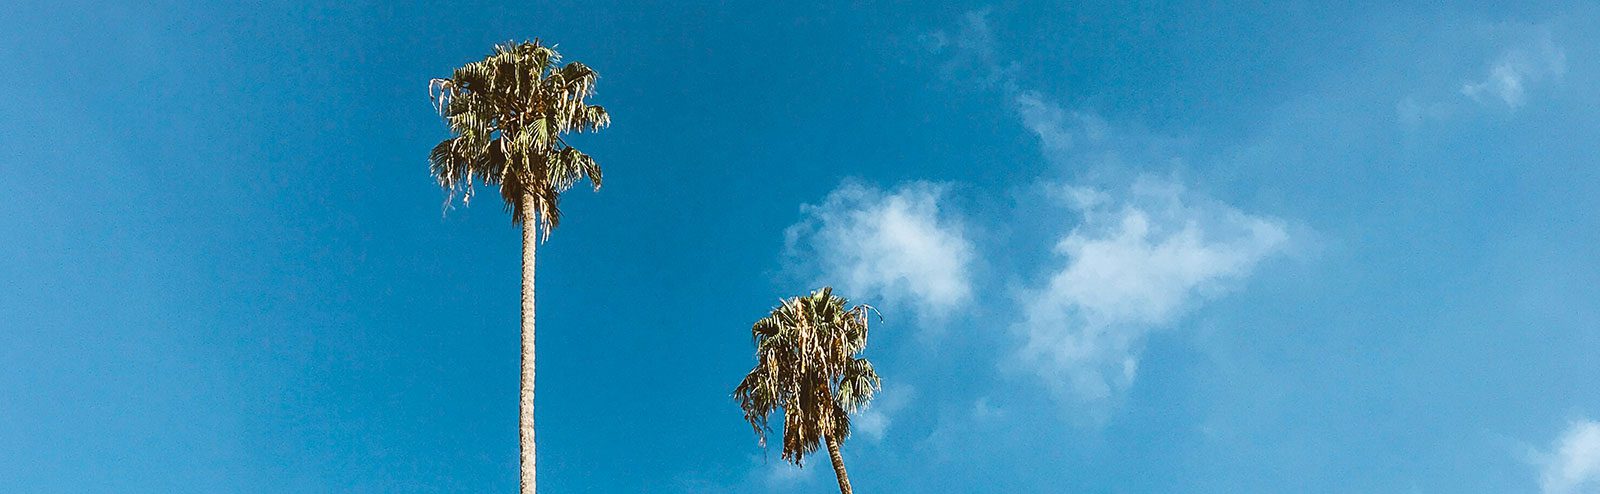 Palm trees and blue skies near the Windsor Square, CA neighborhood